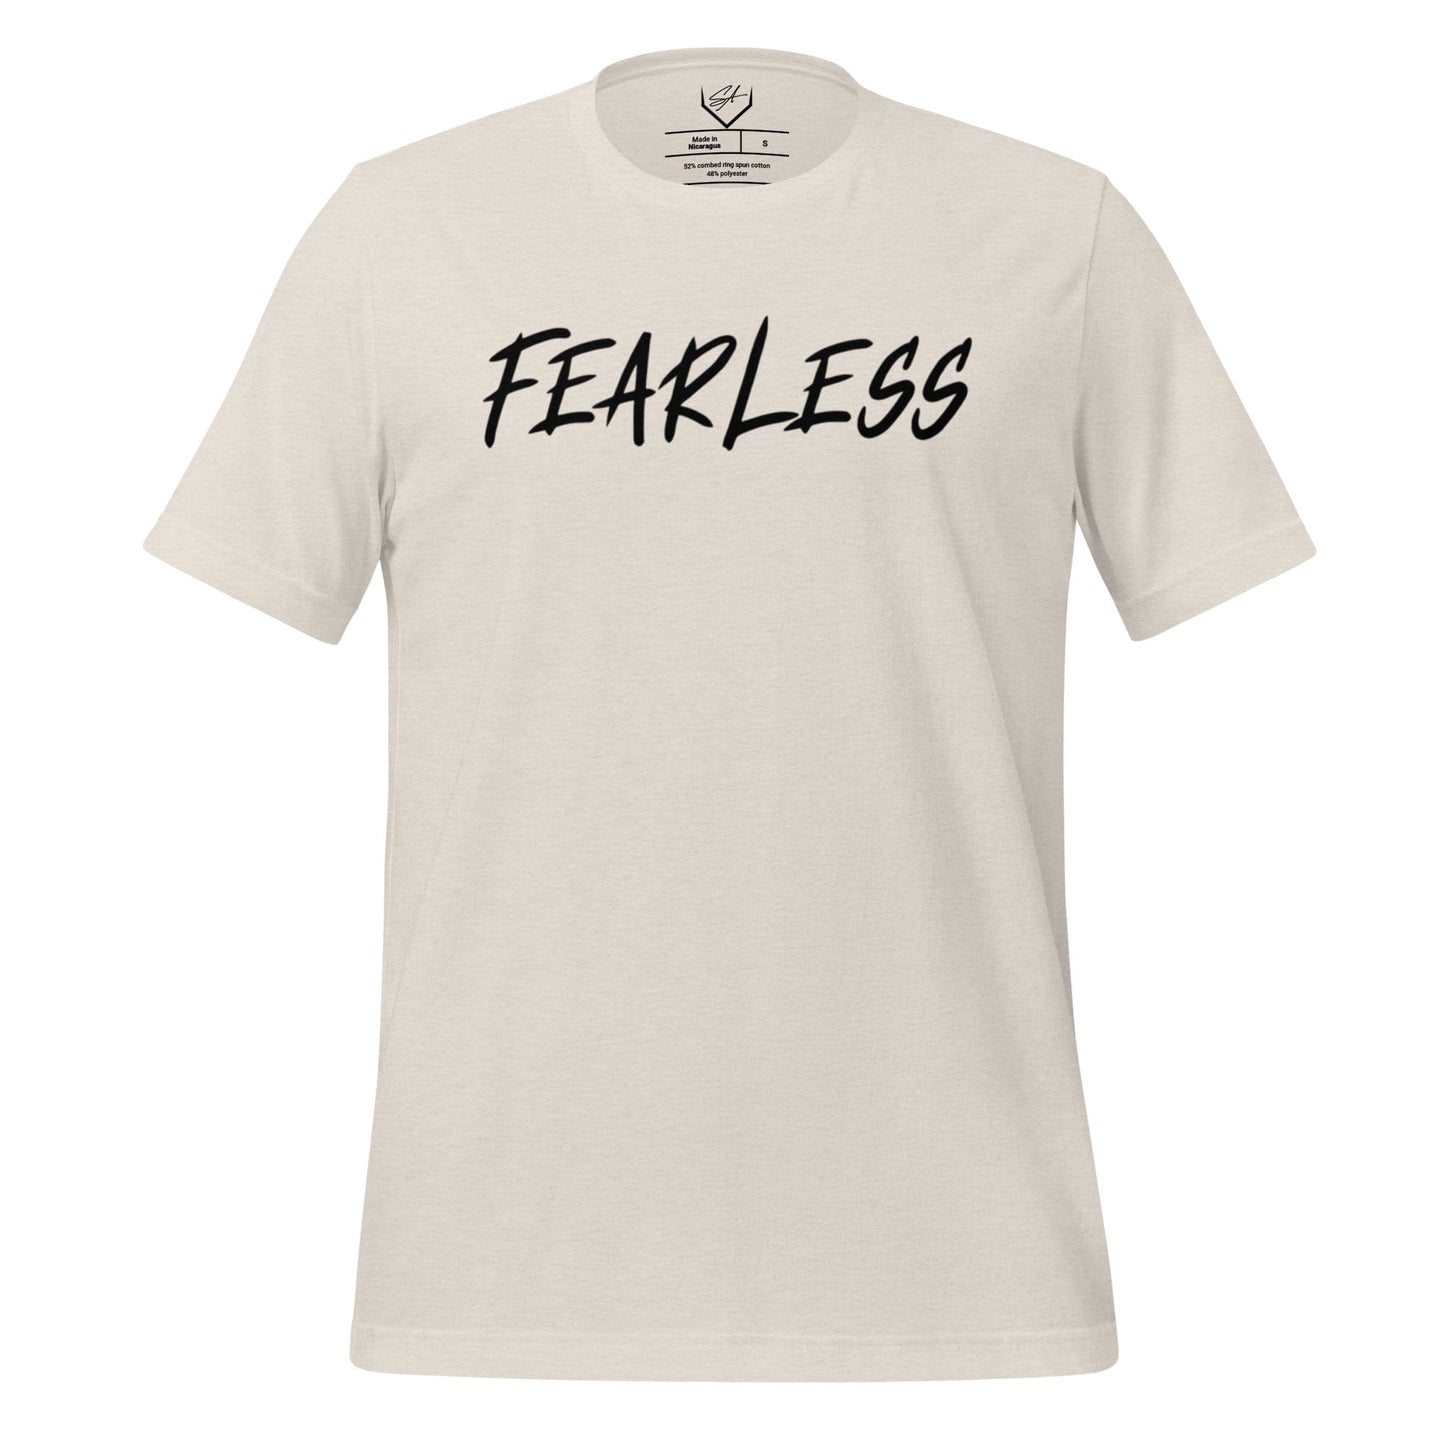 Fearless - Adult Tee